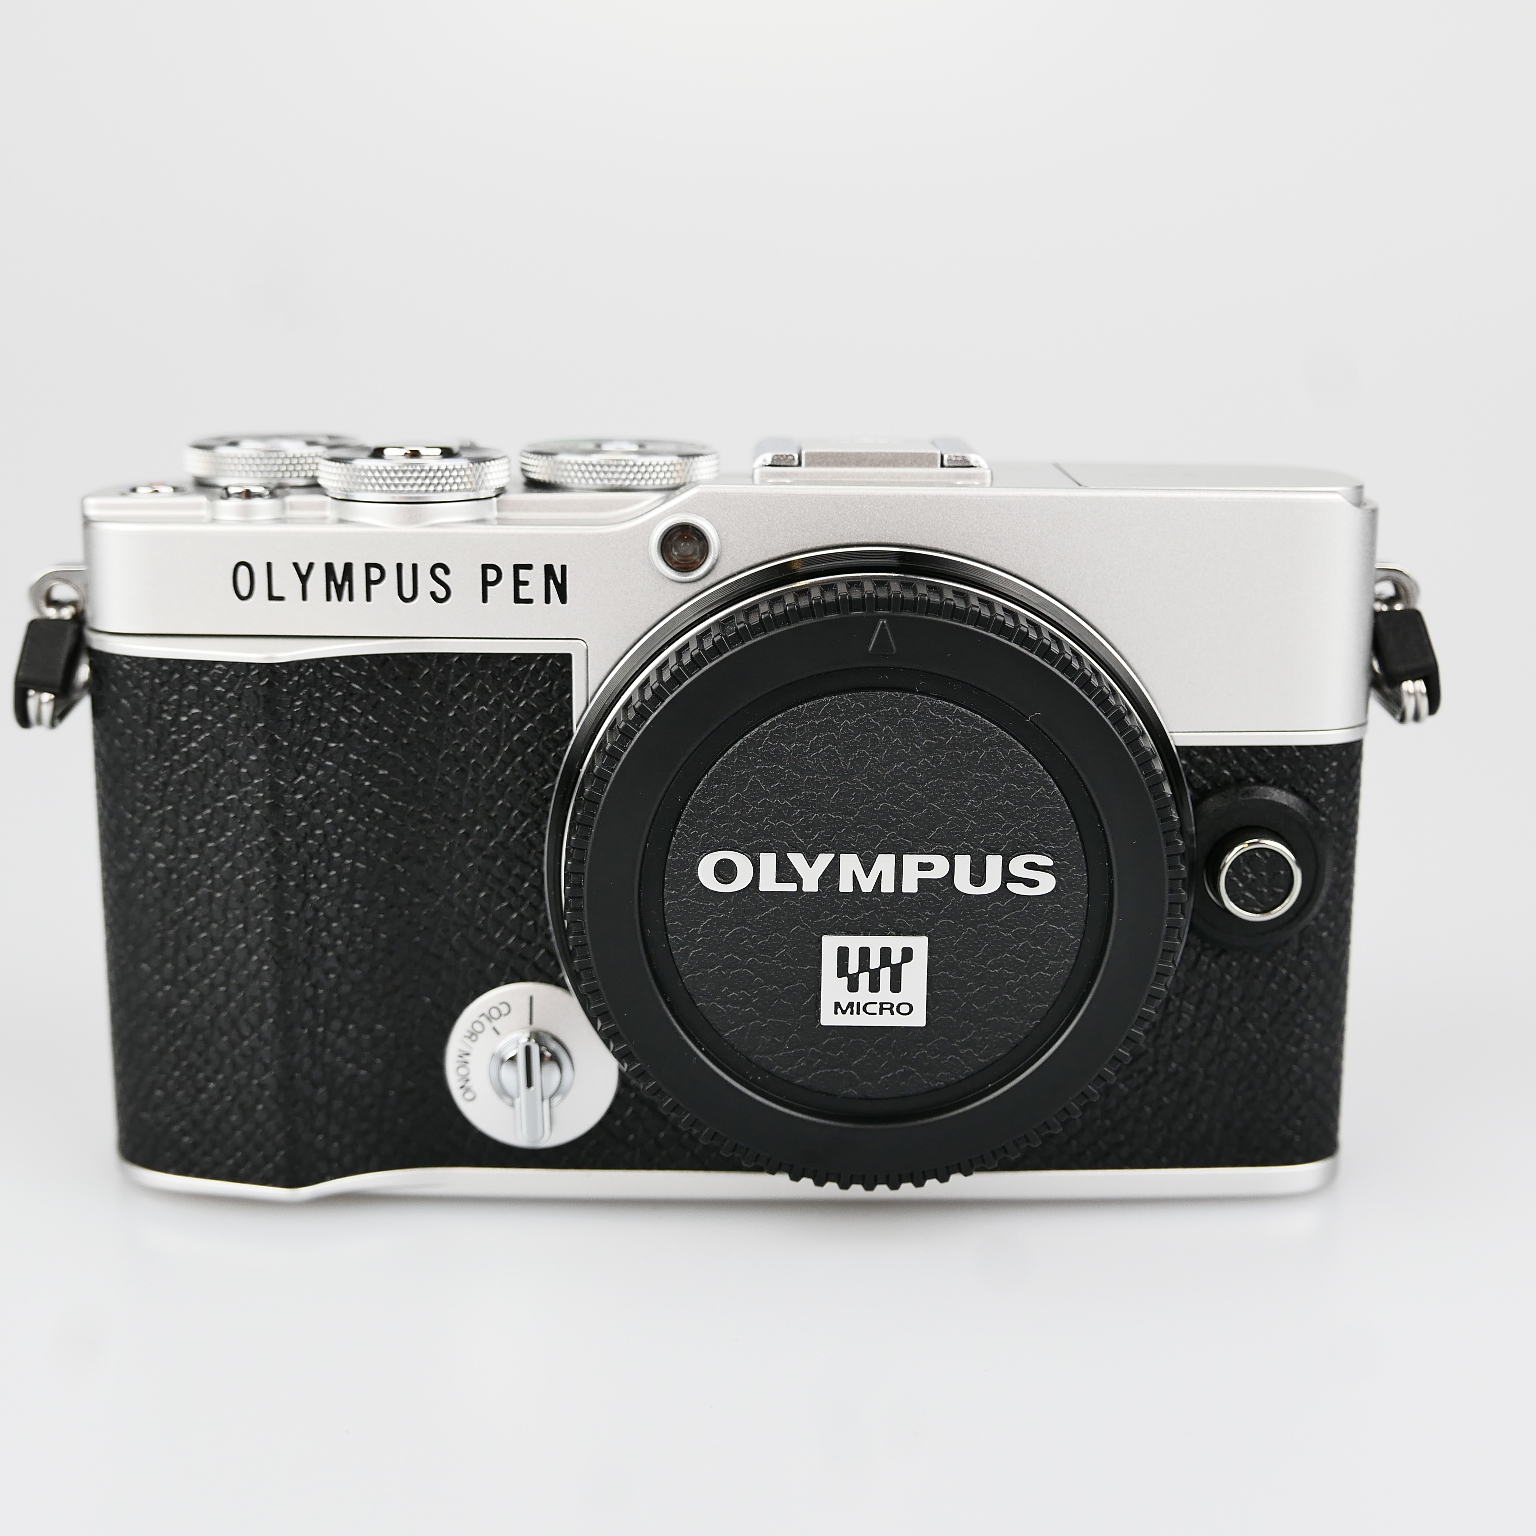 (Myyty) Olympus E-P7 + M.Zuiko Digital 14-42mm - Hopea (Käytetty) (takuu)